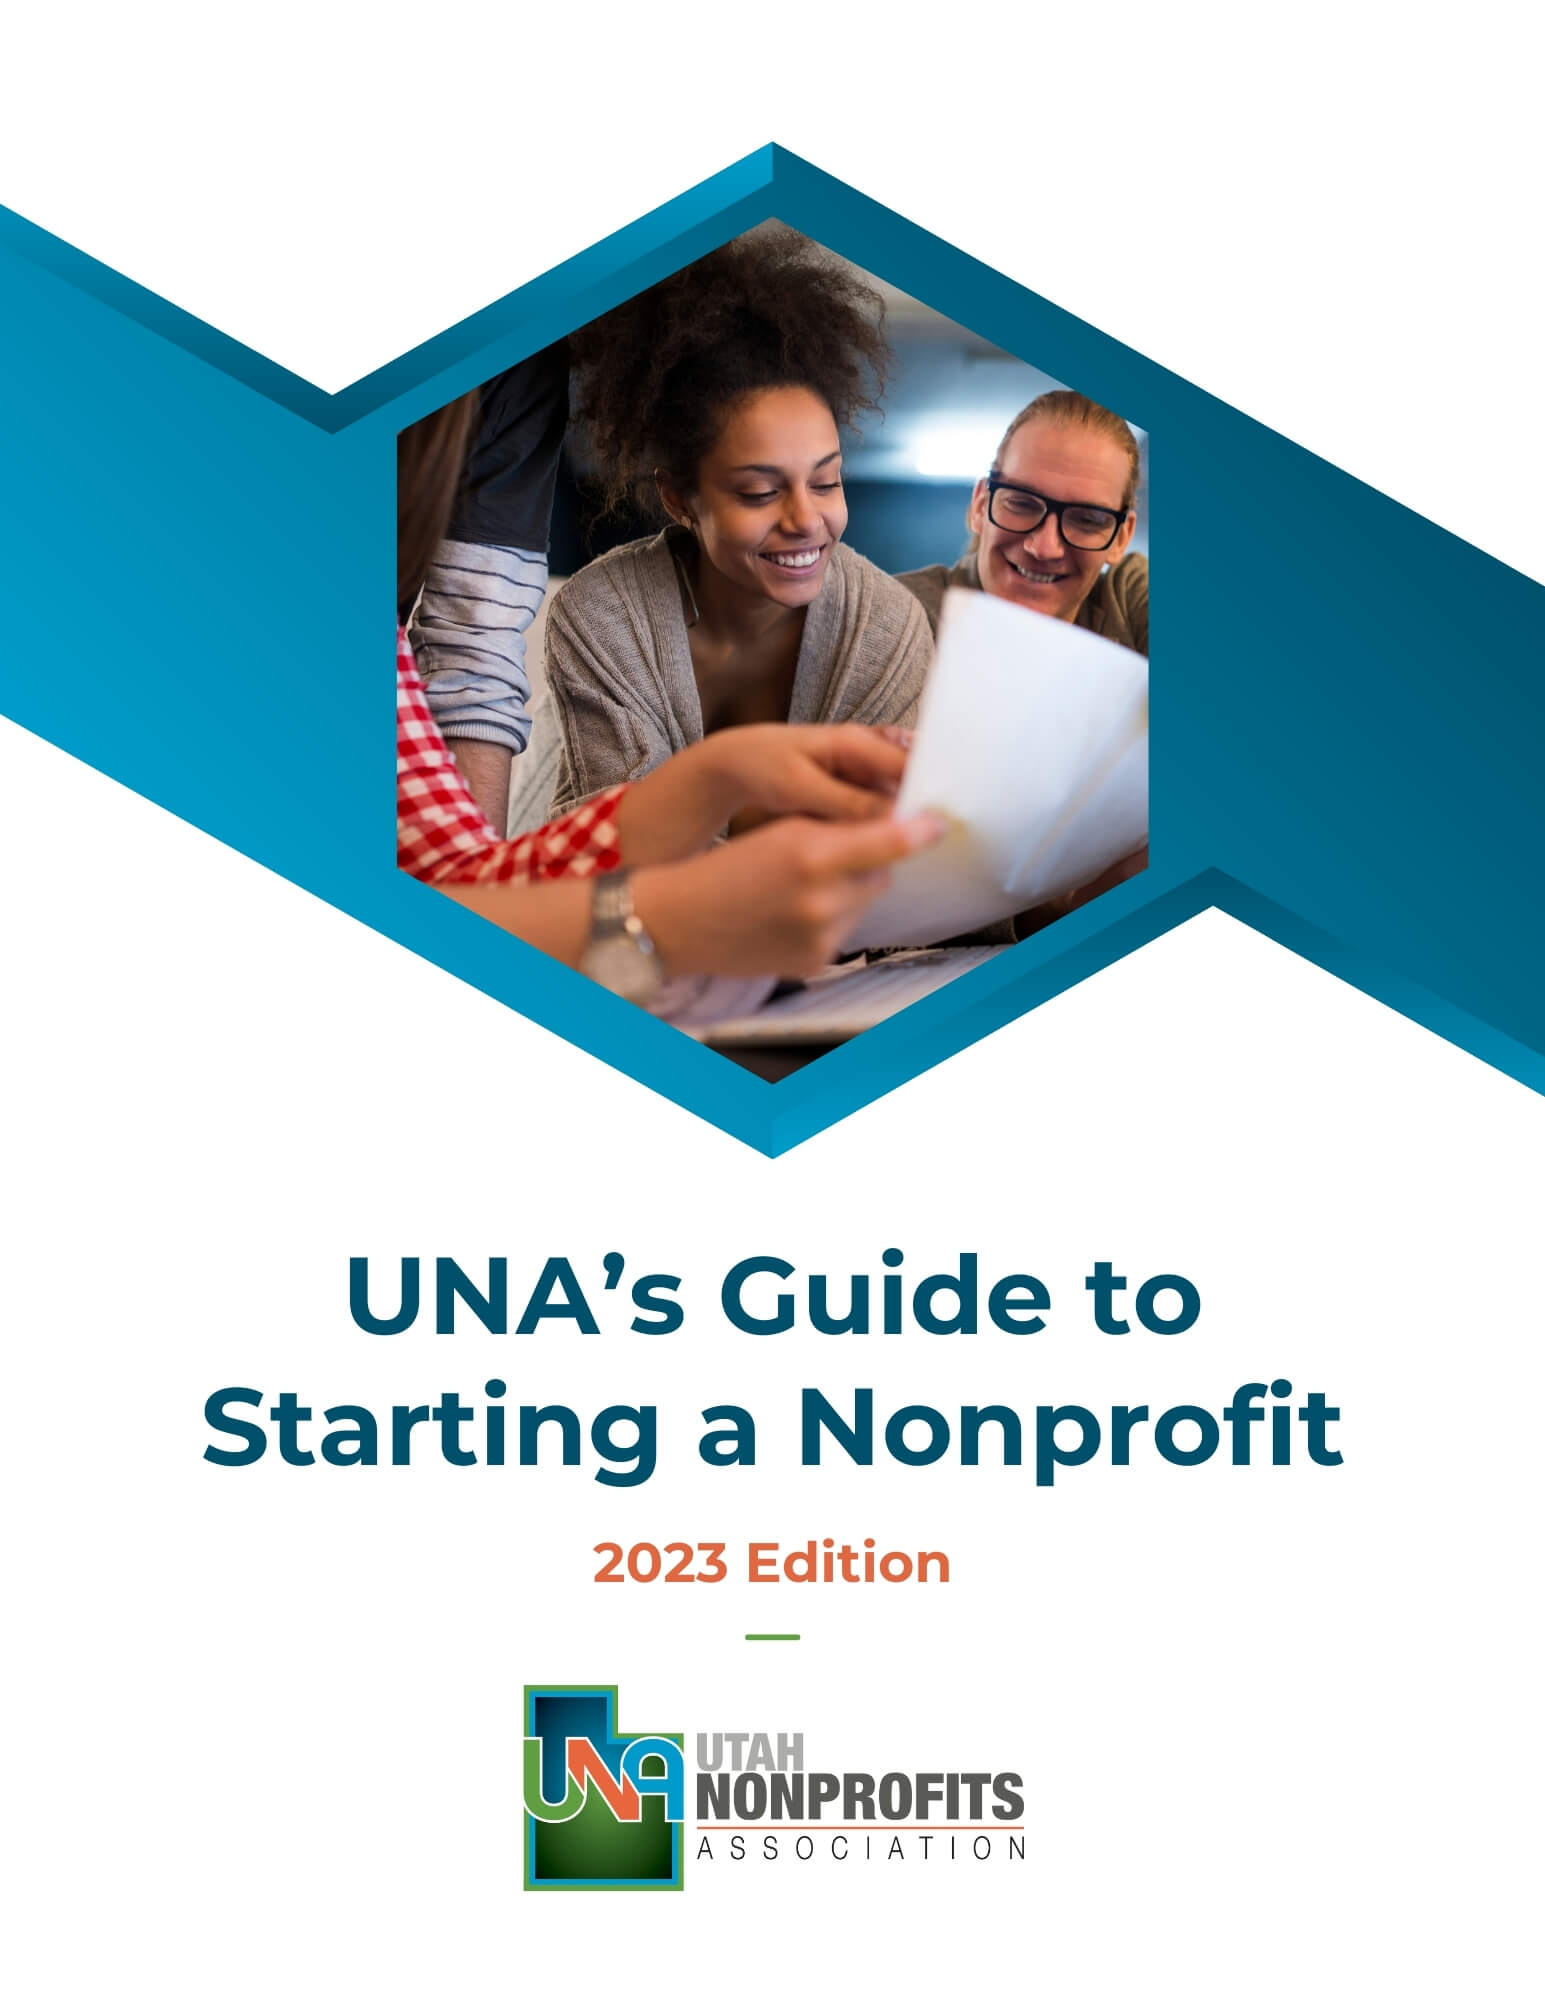 UNA's Guide to starting a Nonprofit